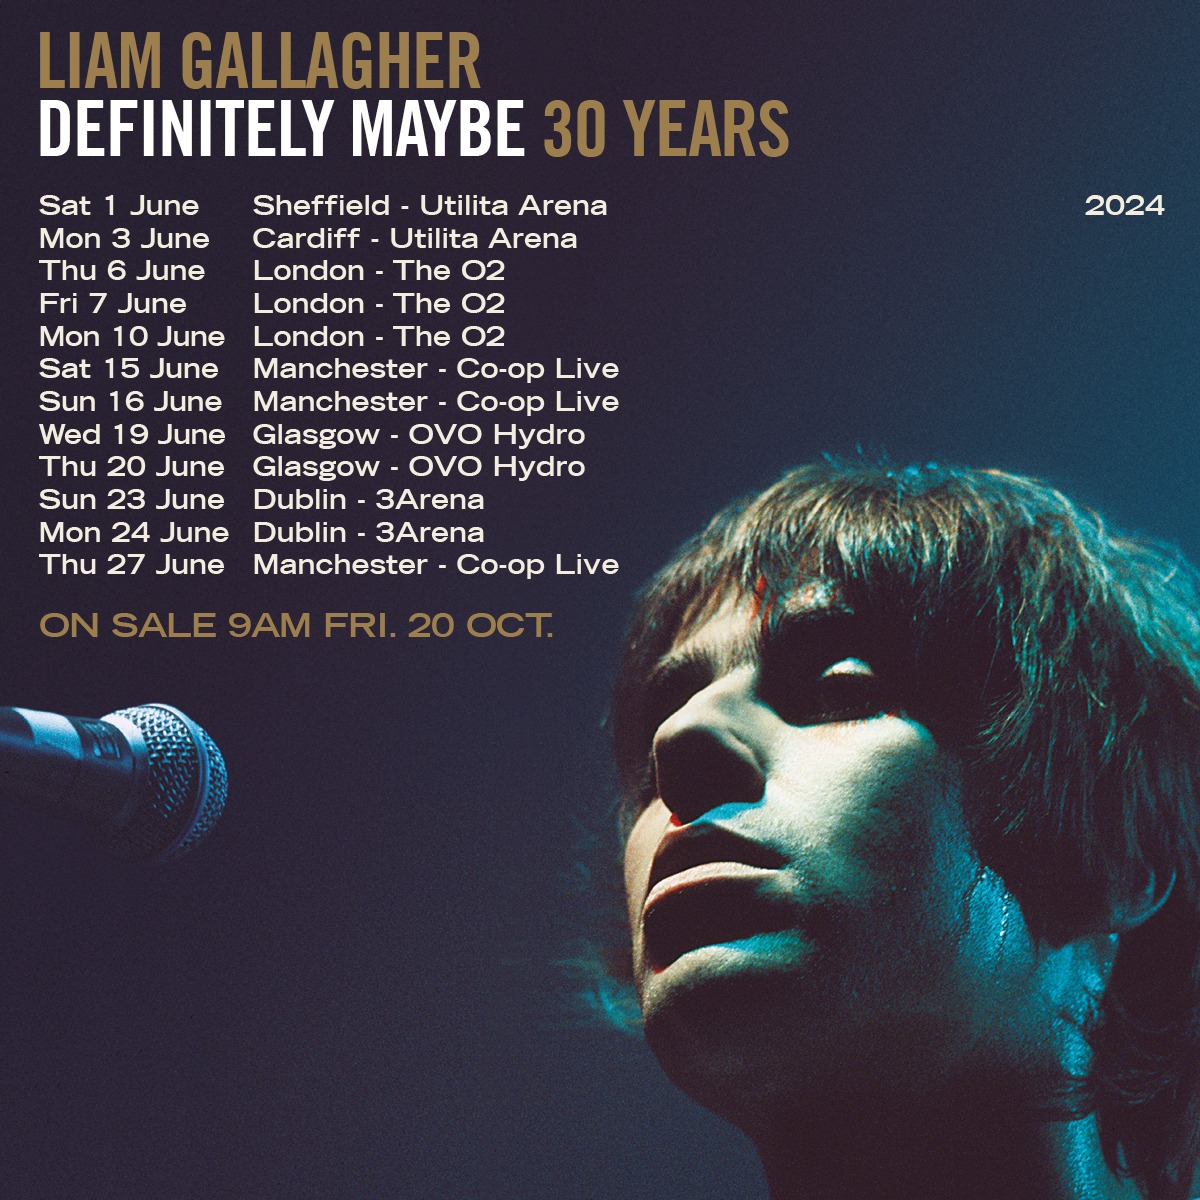 Liam Gallagher - Definitely Maybe 30 Years al 3Arena Dublin Tickets